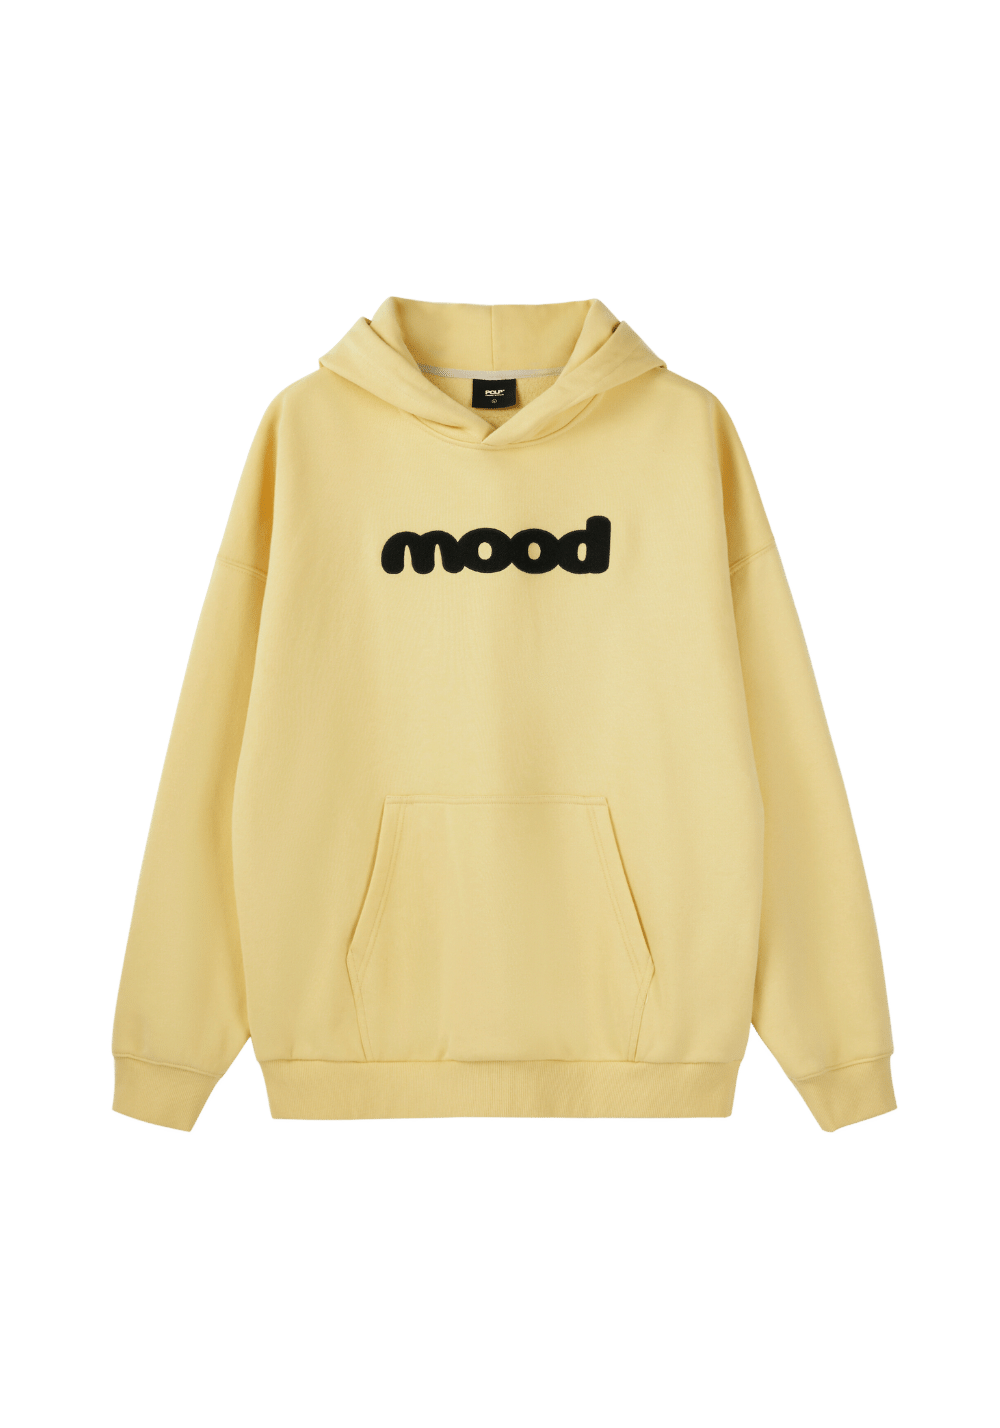 Mood Embroidered Hoodie - PSYLOS 1, Mood Embroidered Hoodie, Hoodie, PCLP, PSYLOS 1